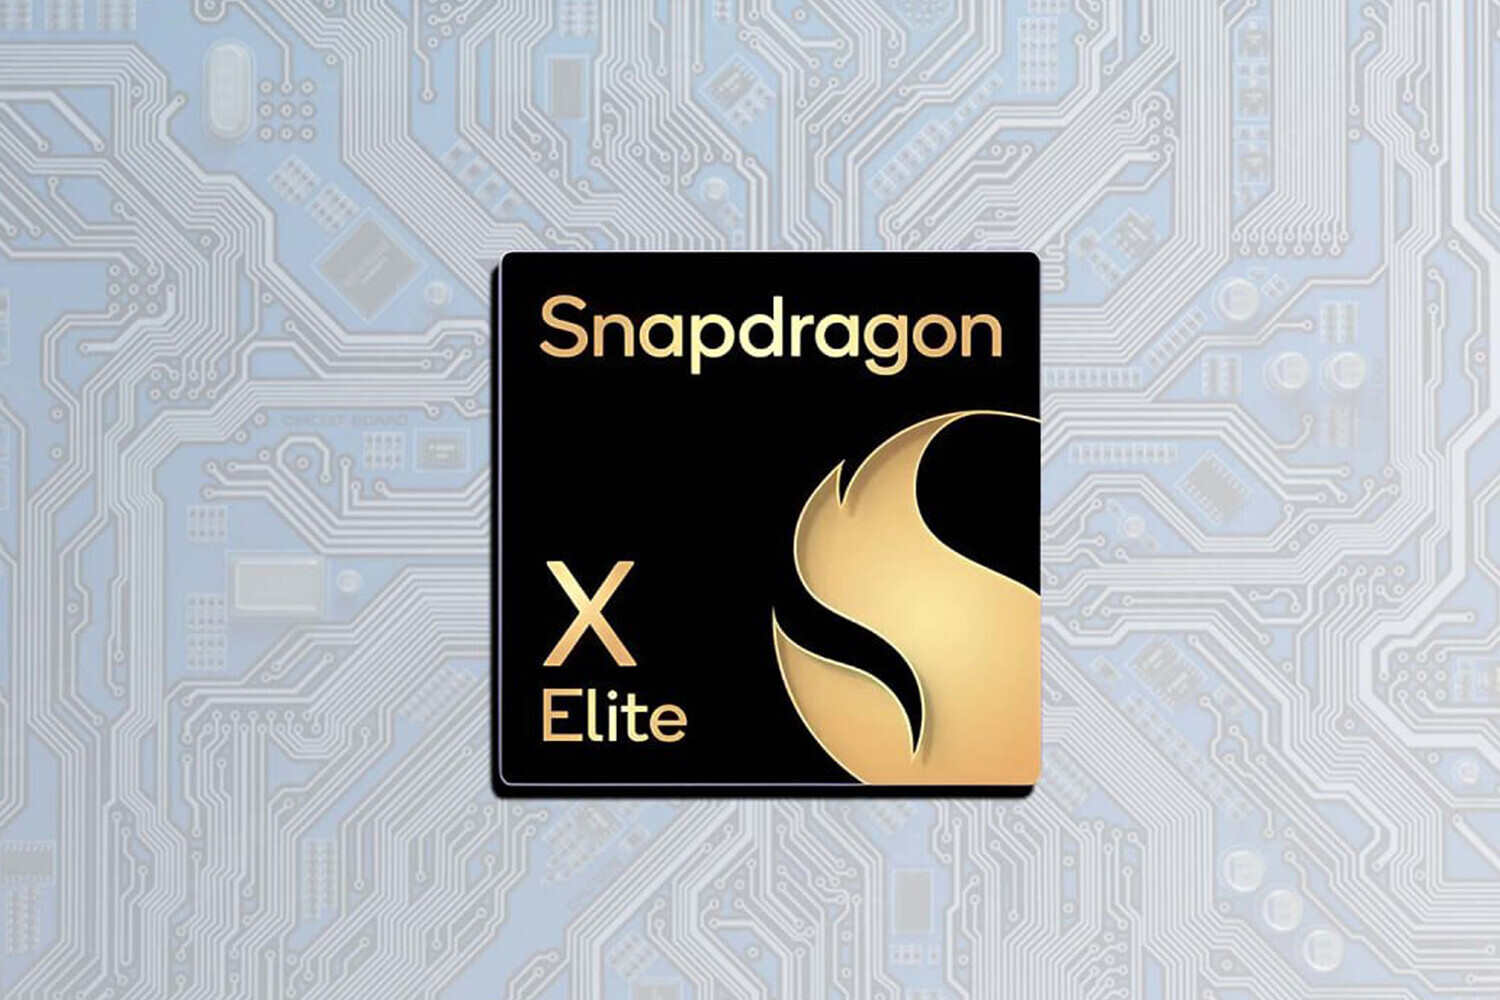  macbook air   samsung snapdragon elite  